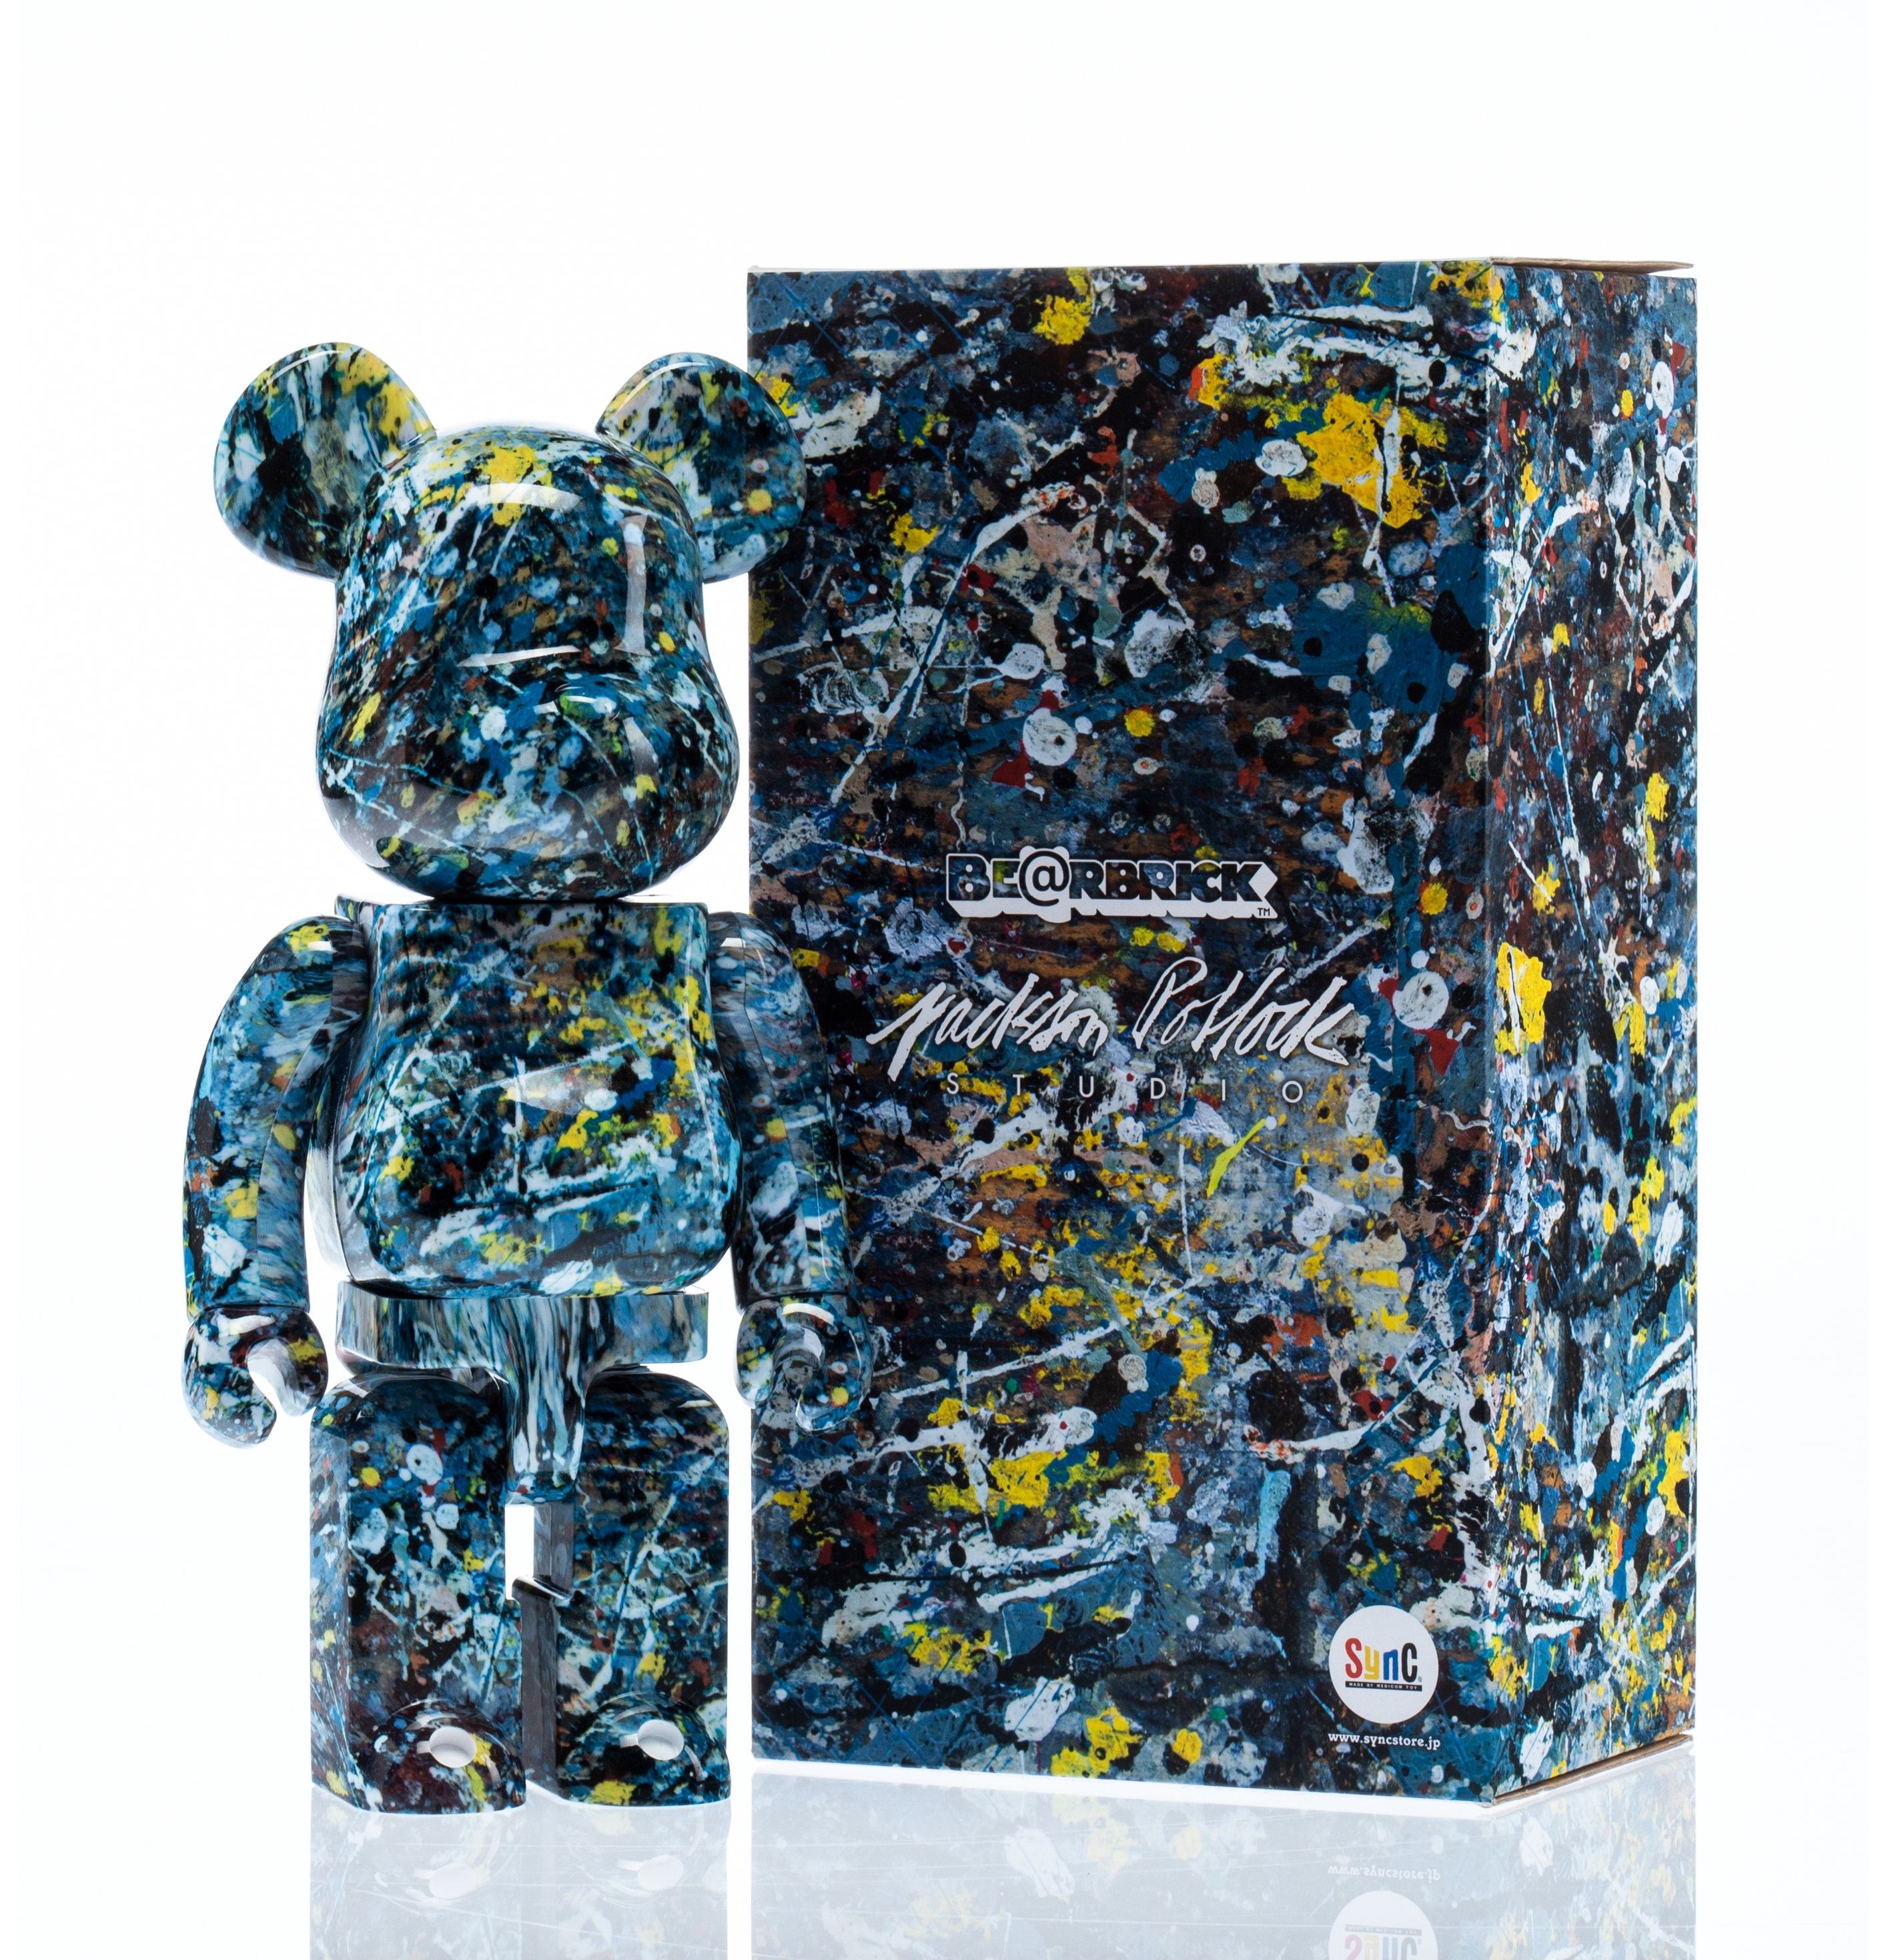 Jackson Pollock | Jackson Pollock Studio (Splash) 1000% (2020 